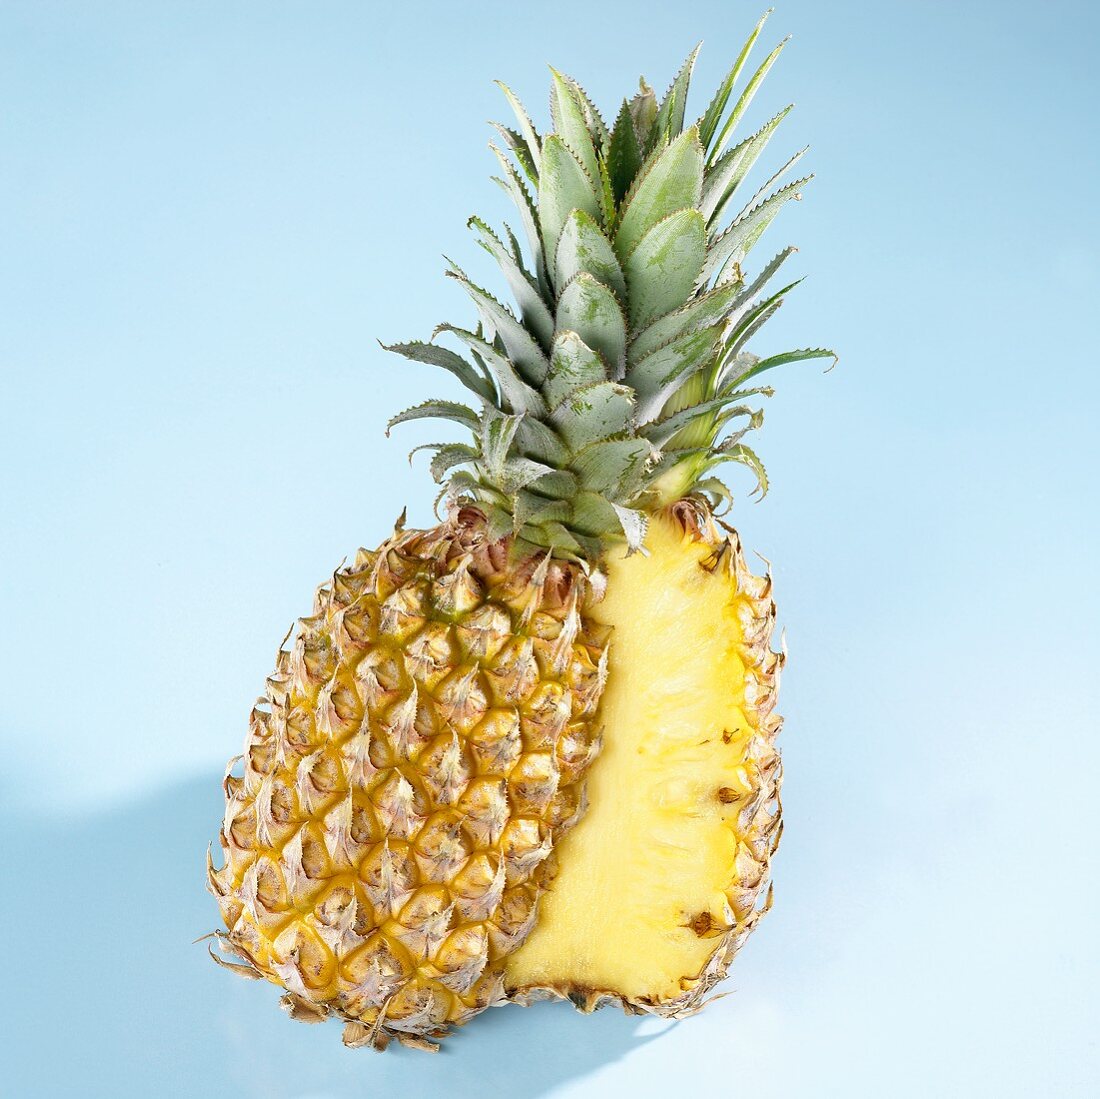 A halved pineapple